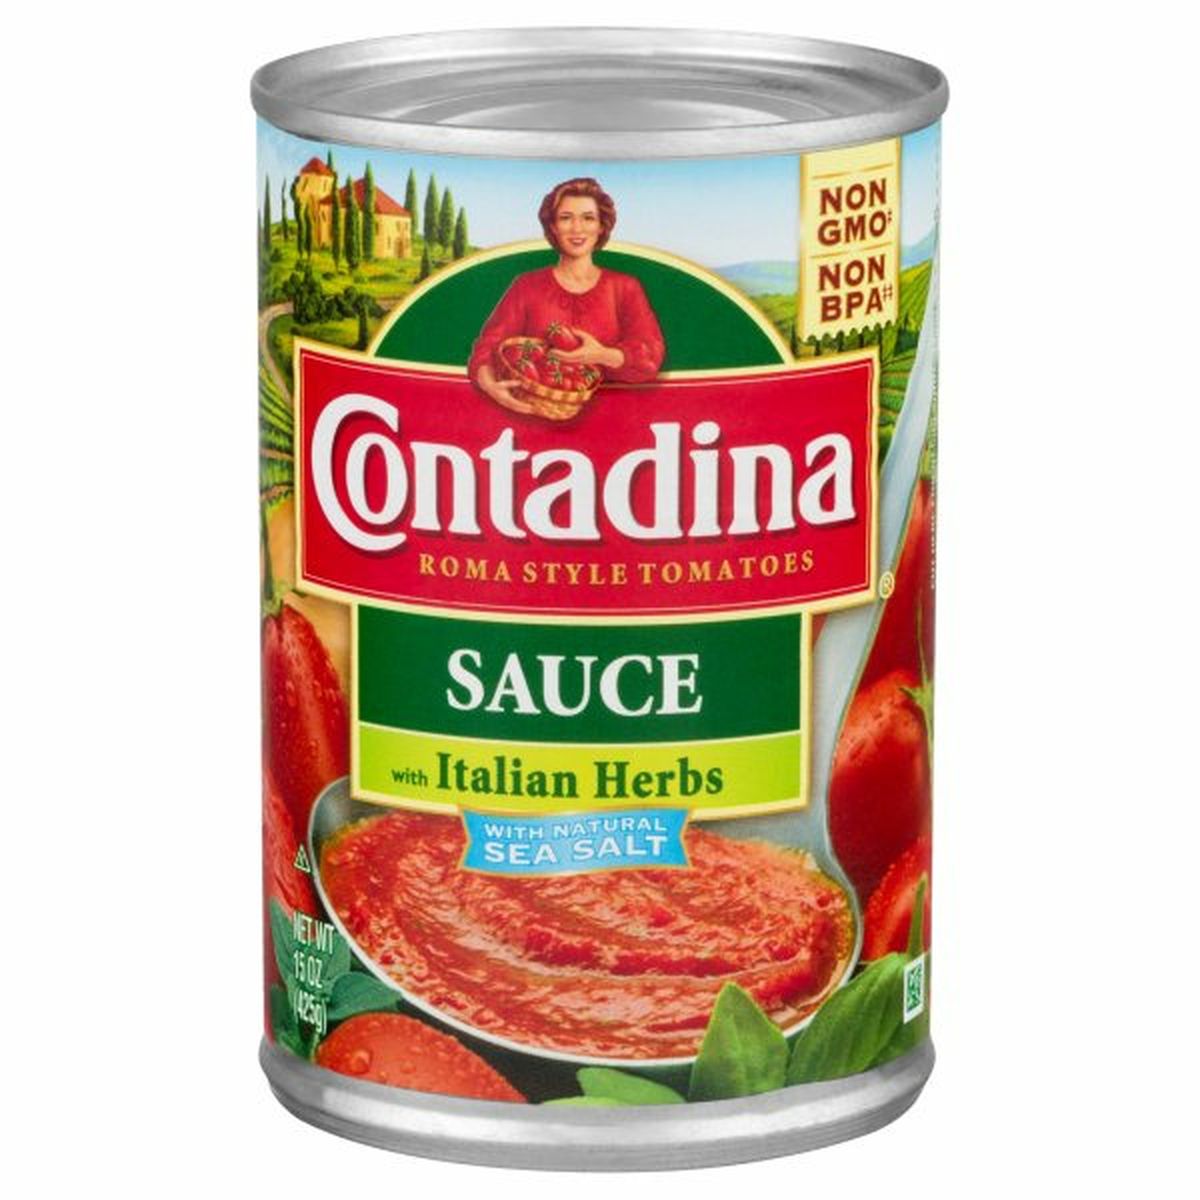 Calories in Contadina Sauce with Italian Herbs